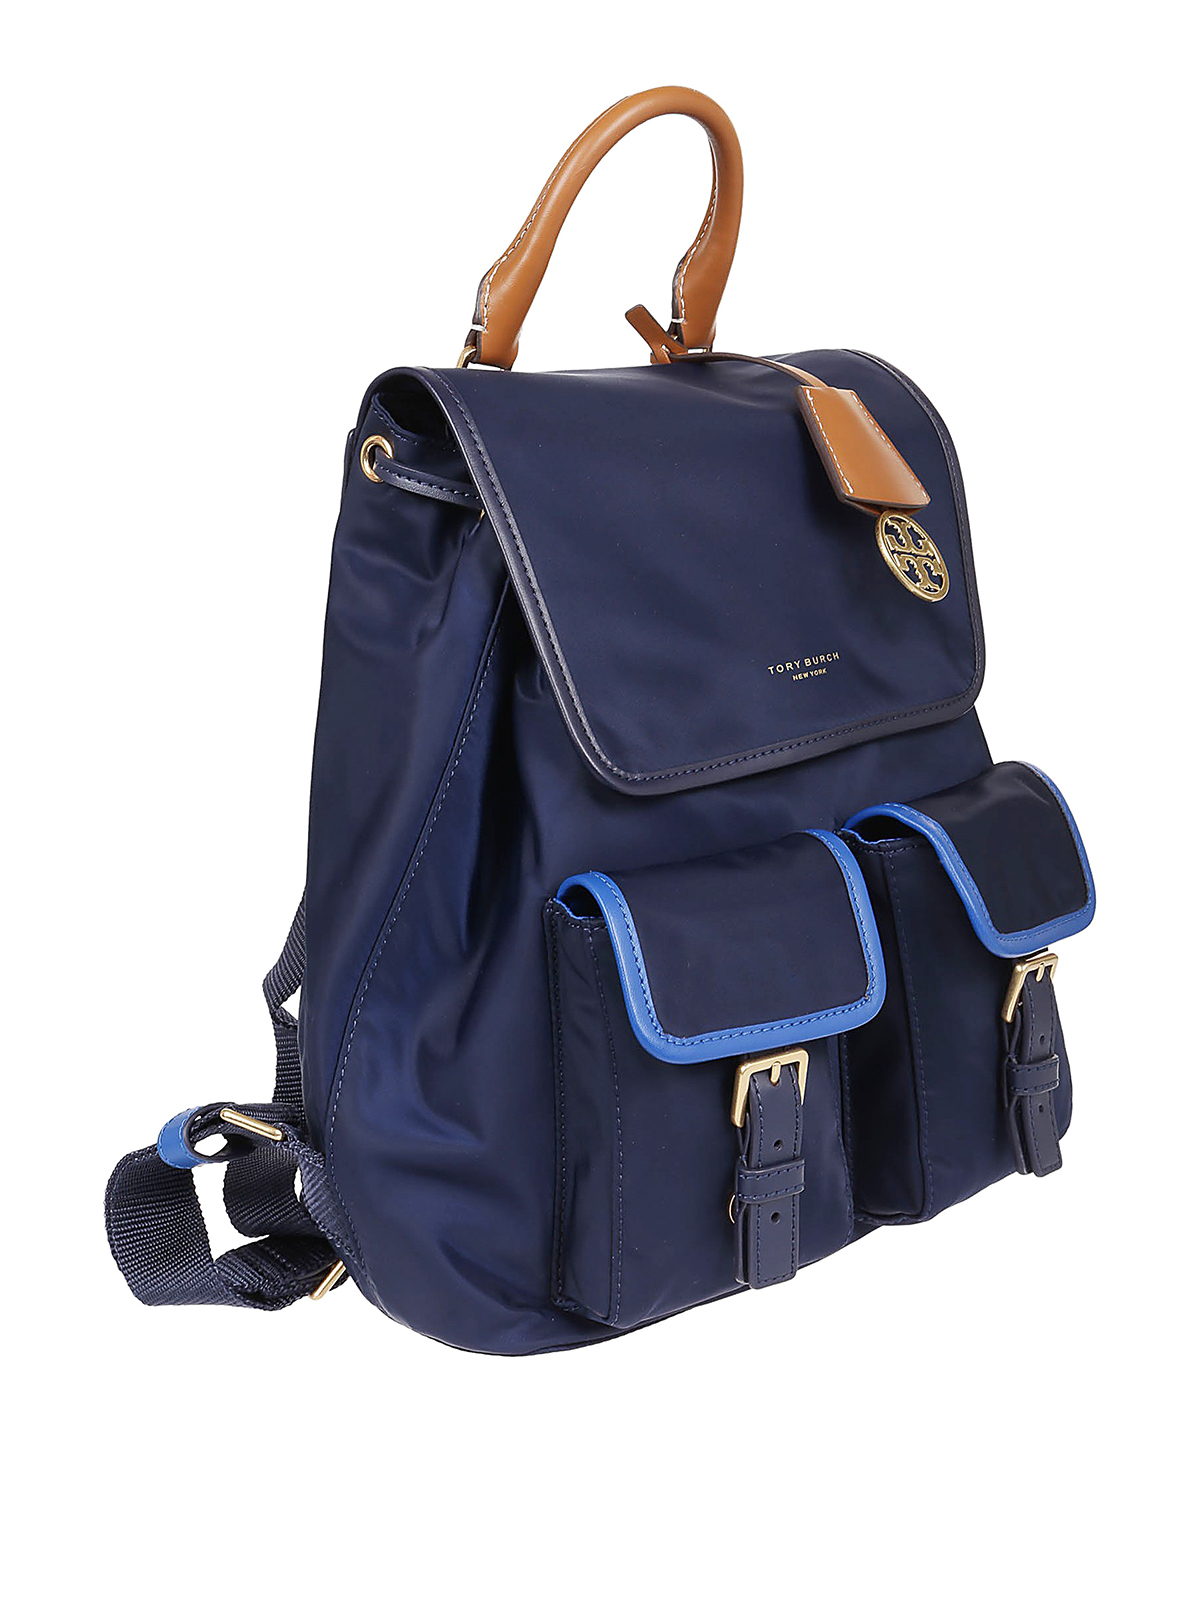 Backpacks Tory Burch - Perry royal blue nylon backpack - 58403403